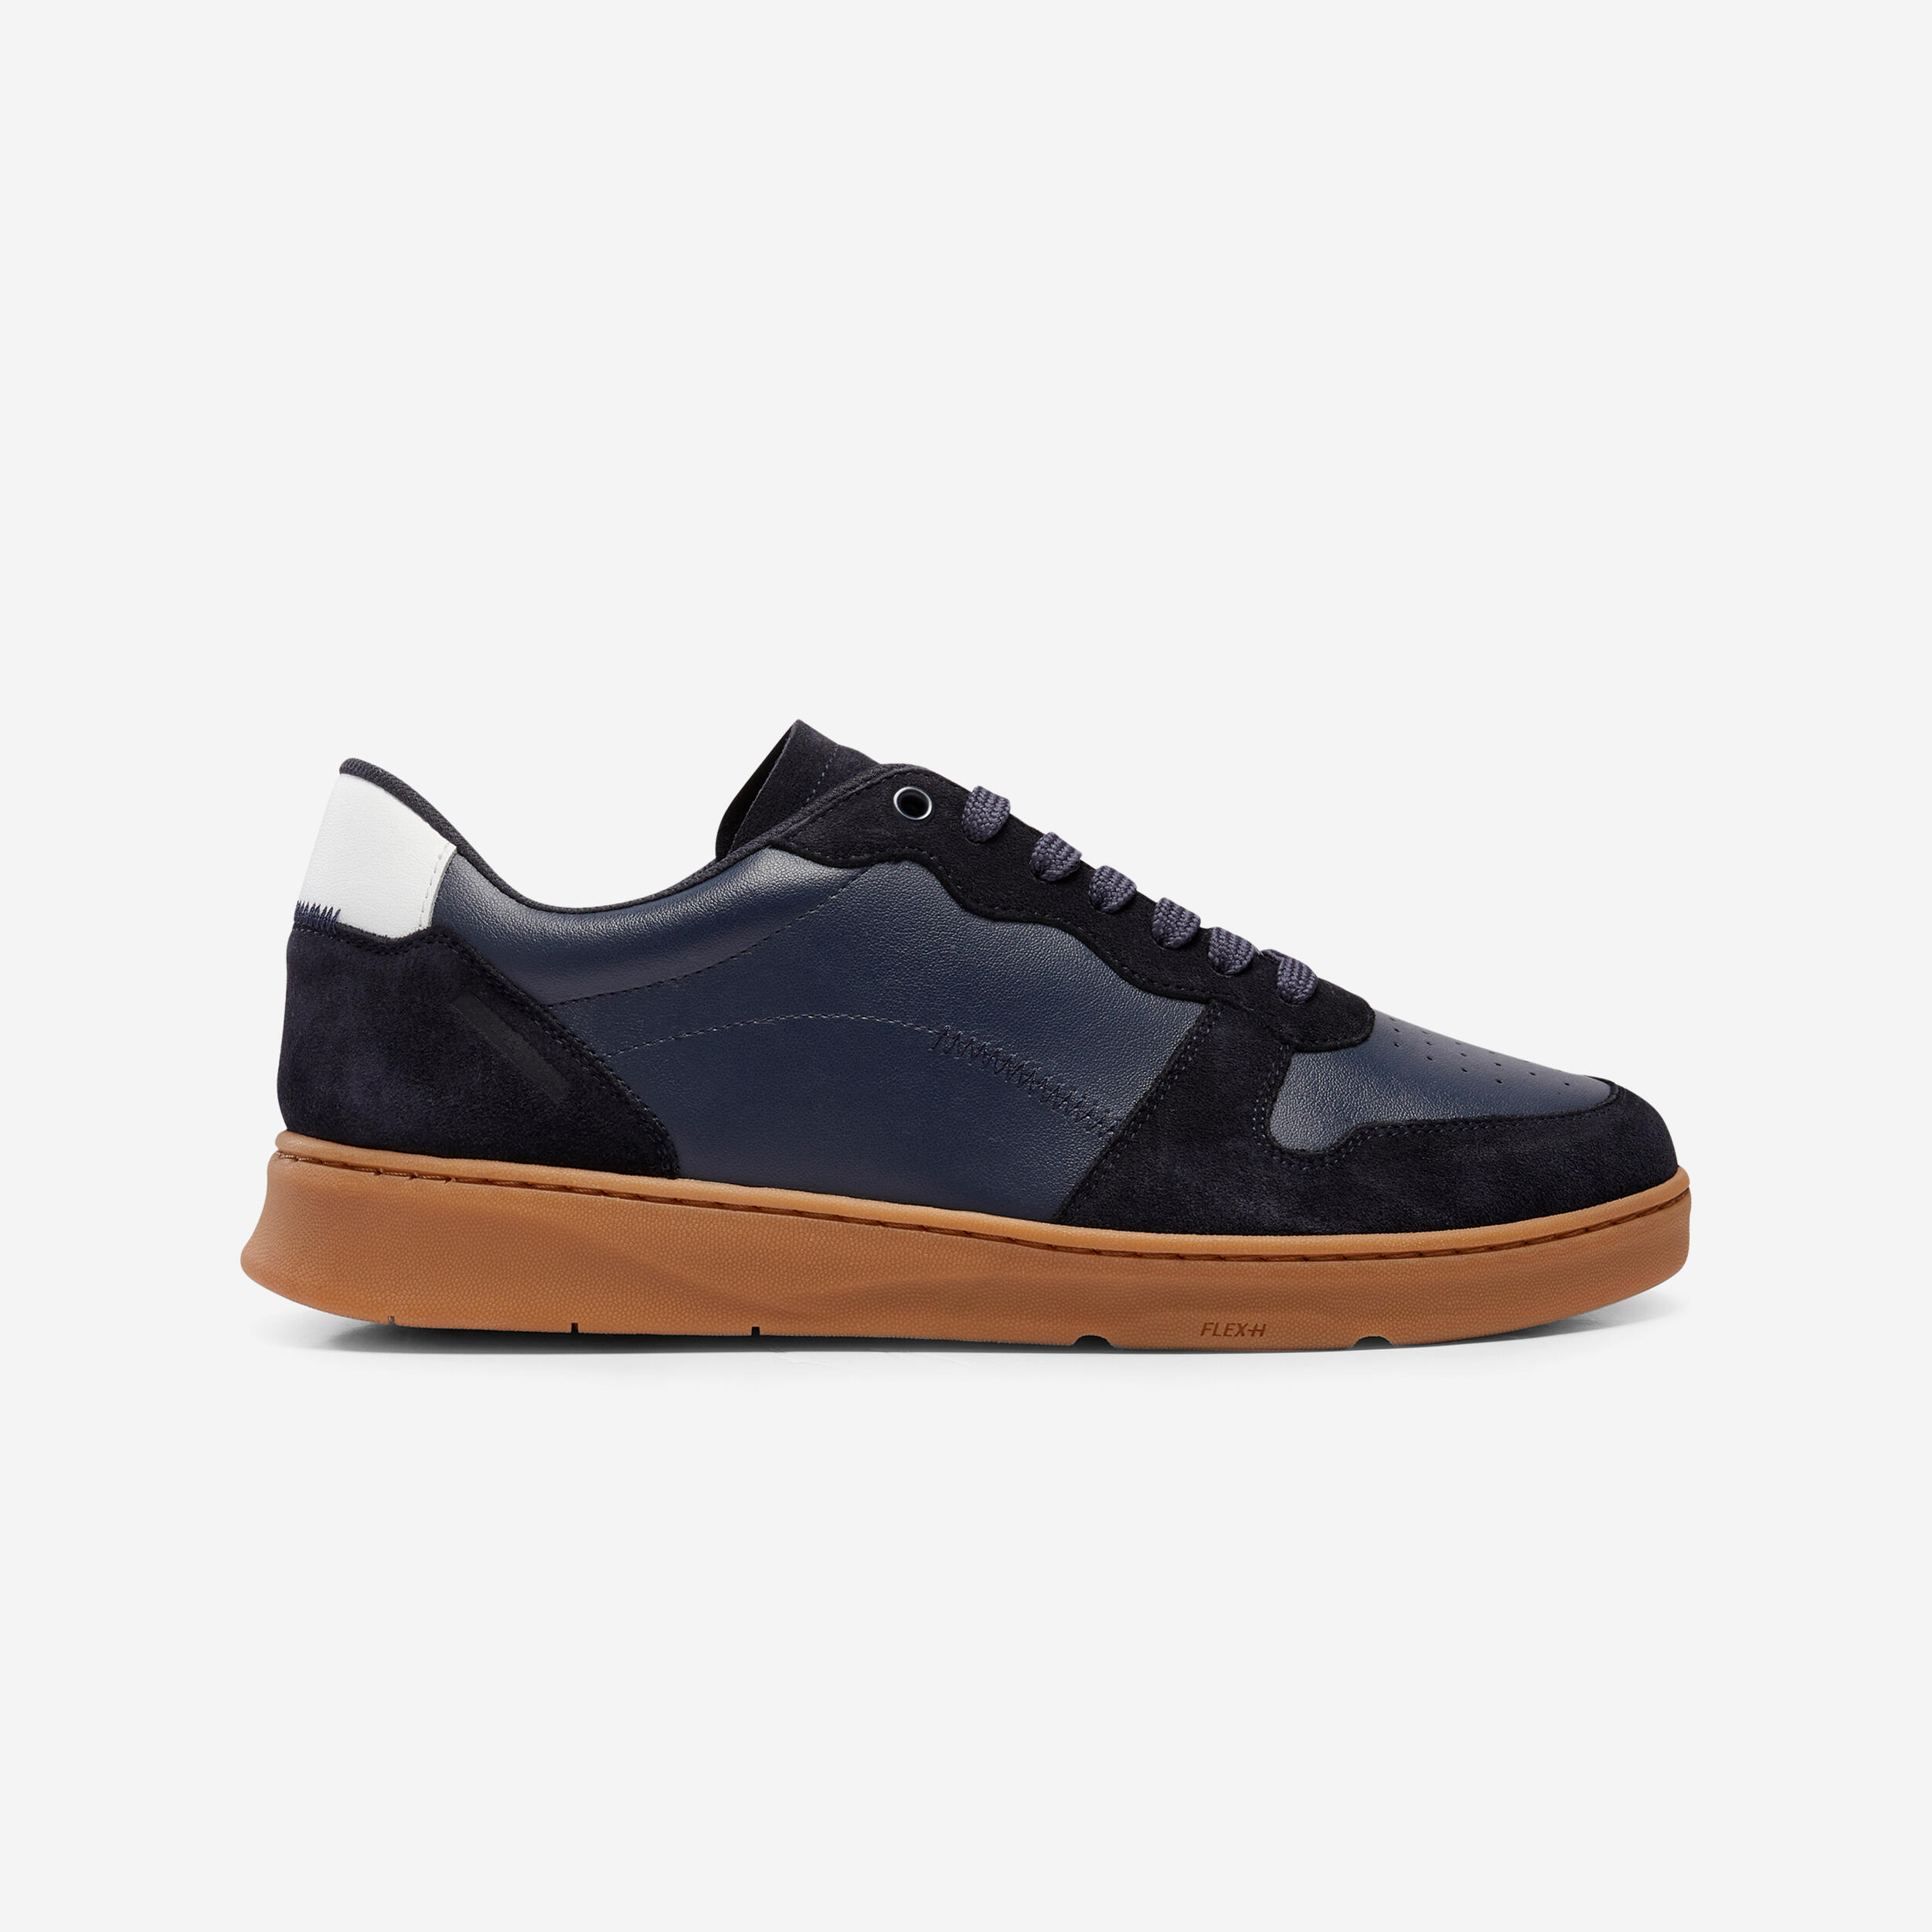 KALENJI Walk Portect Men's Leather Walking Shoes - Navy Blue